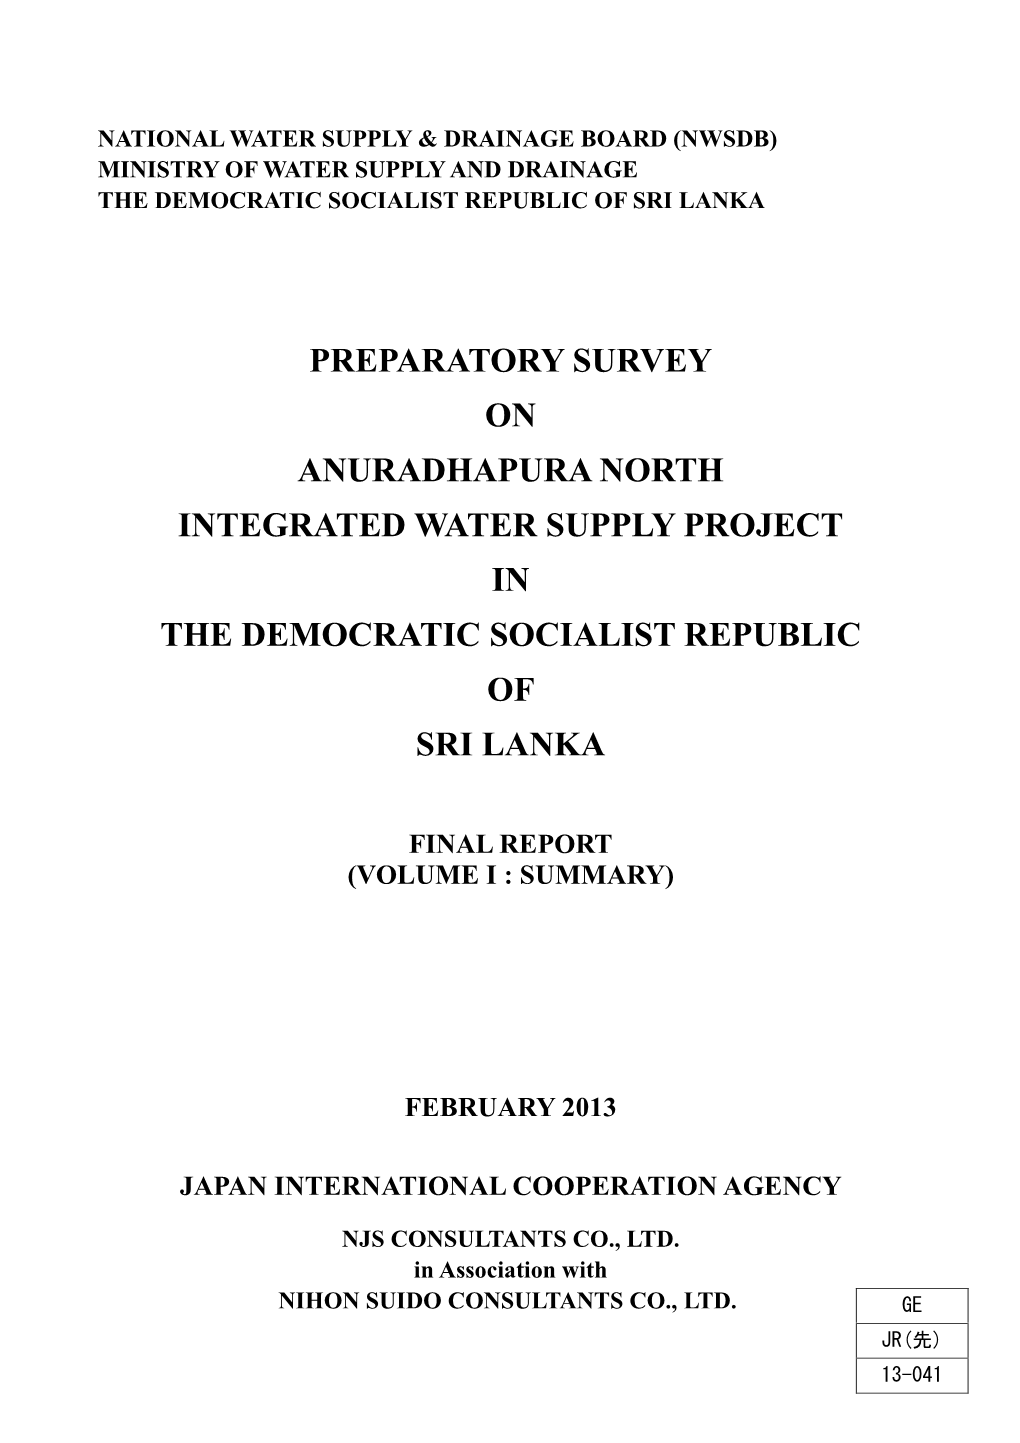 Preparatory Survey on Anuradhapura North Integrated Water Supply Project in the Democratic Socialist Republic of Sri Lanka